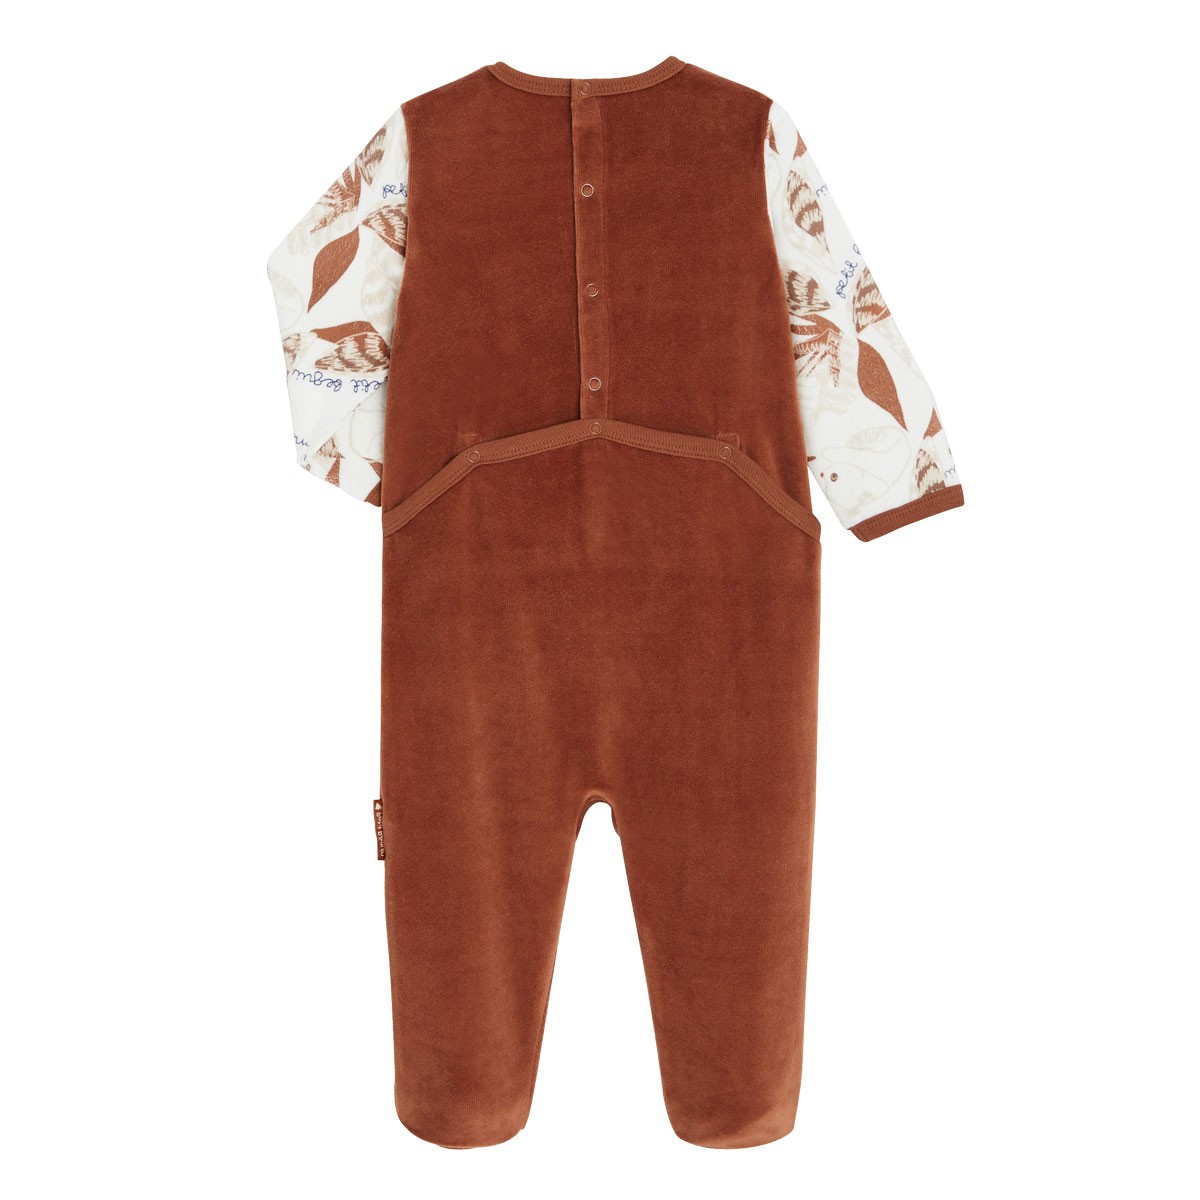 Pyjama bébé en velours contenant du coton bio Monbassa dos